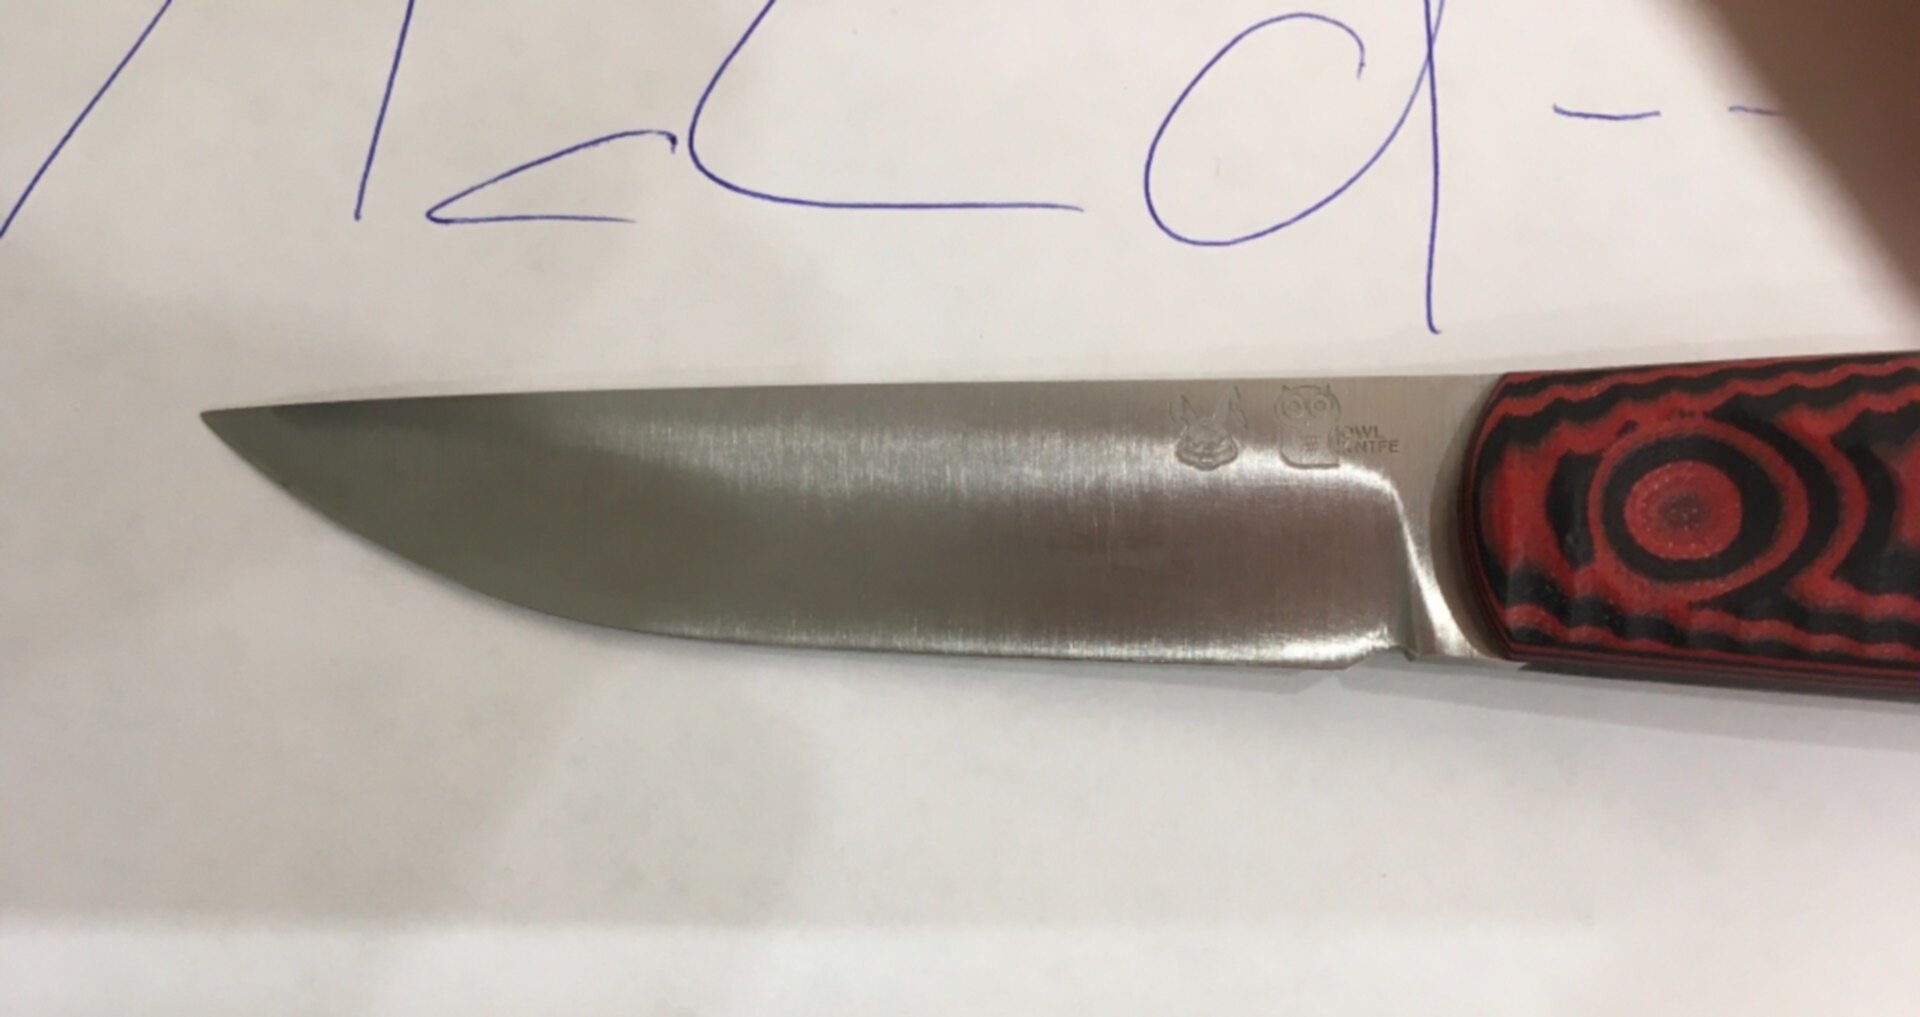 20 ножевых. Нож North XS. Owl Knife North-XS. Owl Knife North-XS F. Owl Knife North-XS 8.2 см, сталь Elmax.